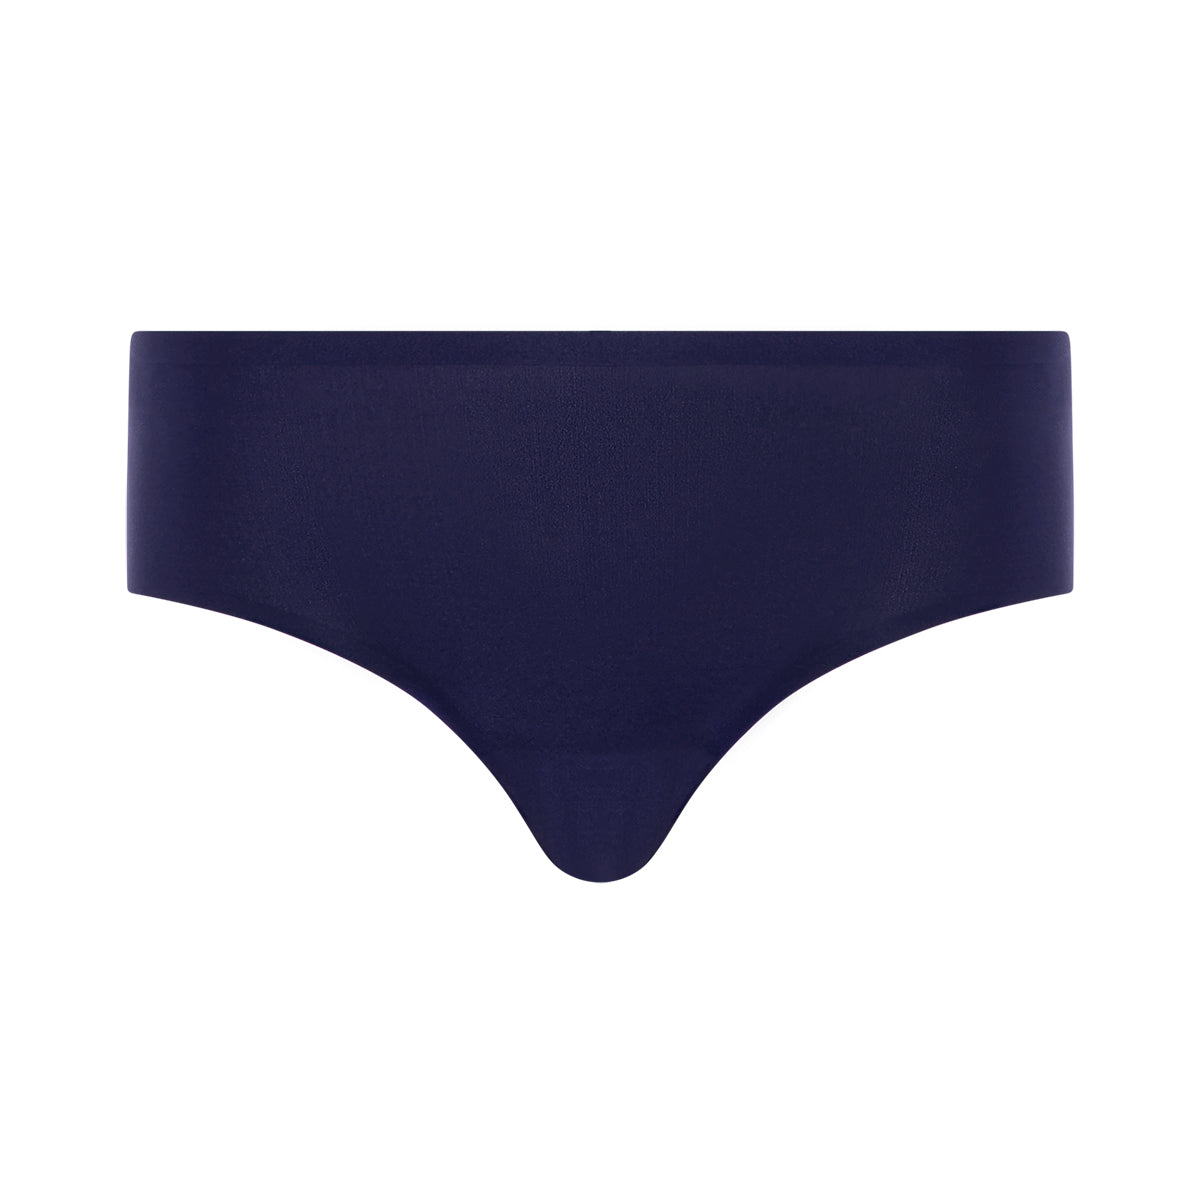 Moda-Underwear:Chantelle Soft Stretch Seamless Blue Full Brief in One Size  (One Size - Blu) - CH2647-K4-UN